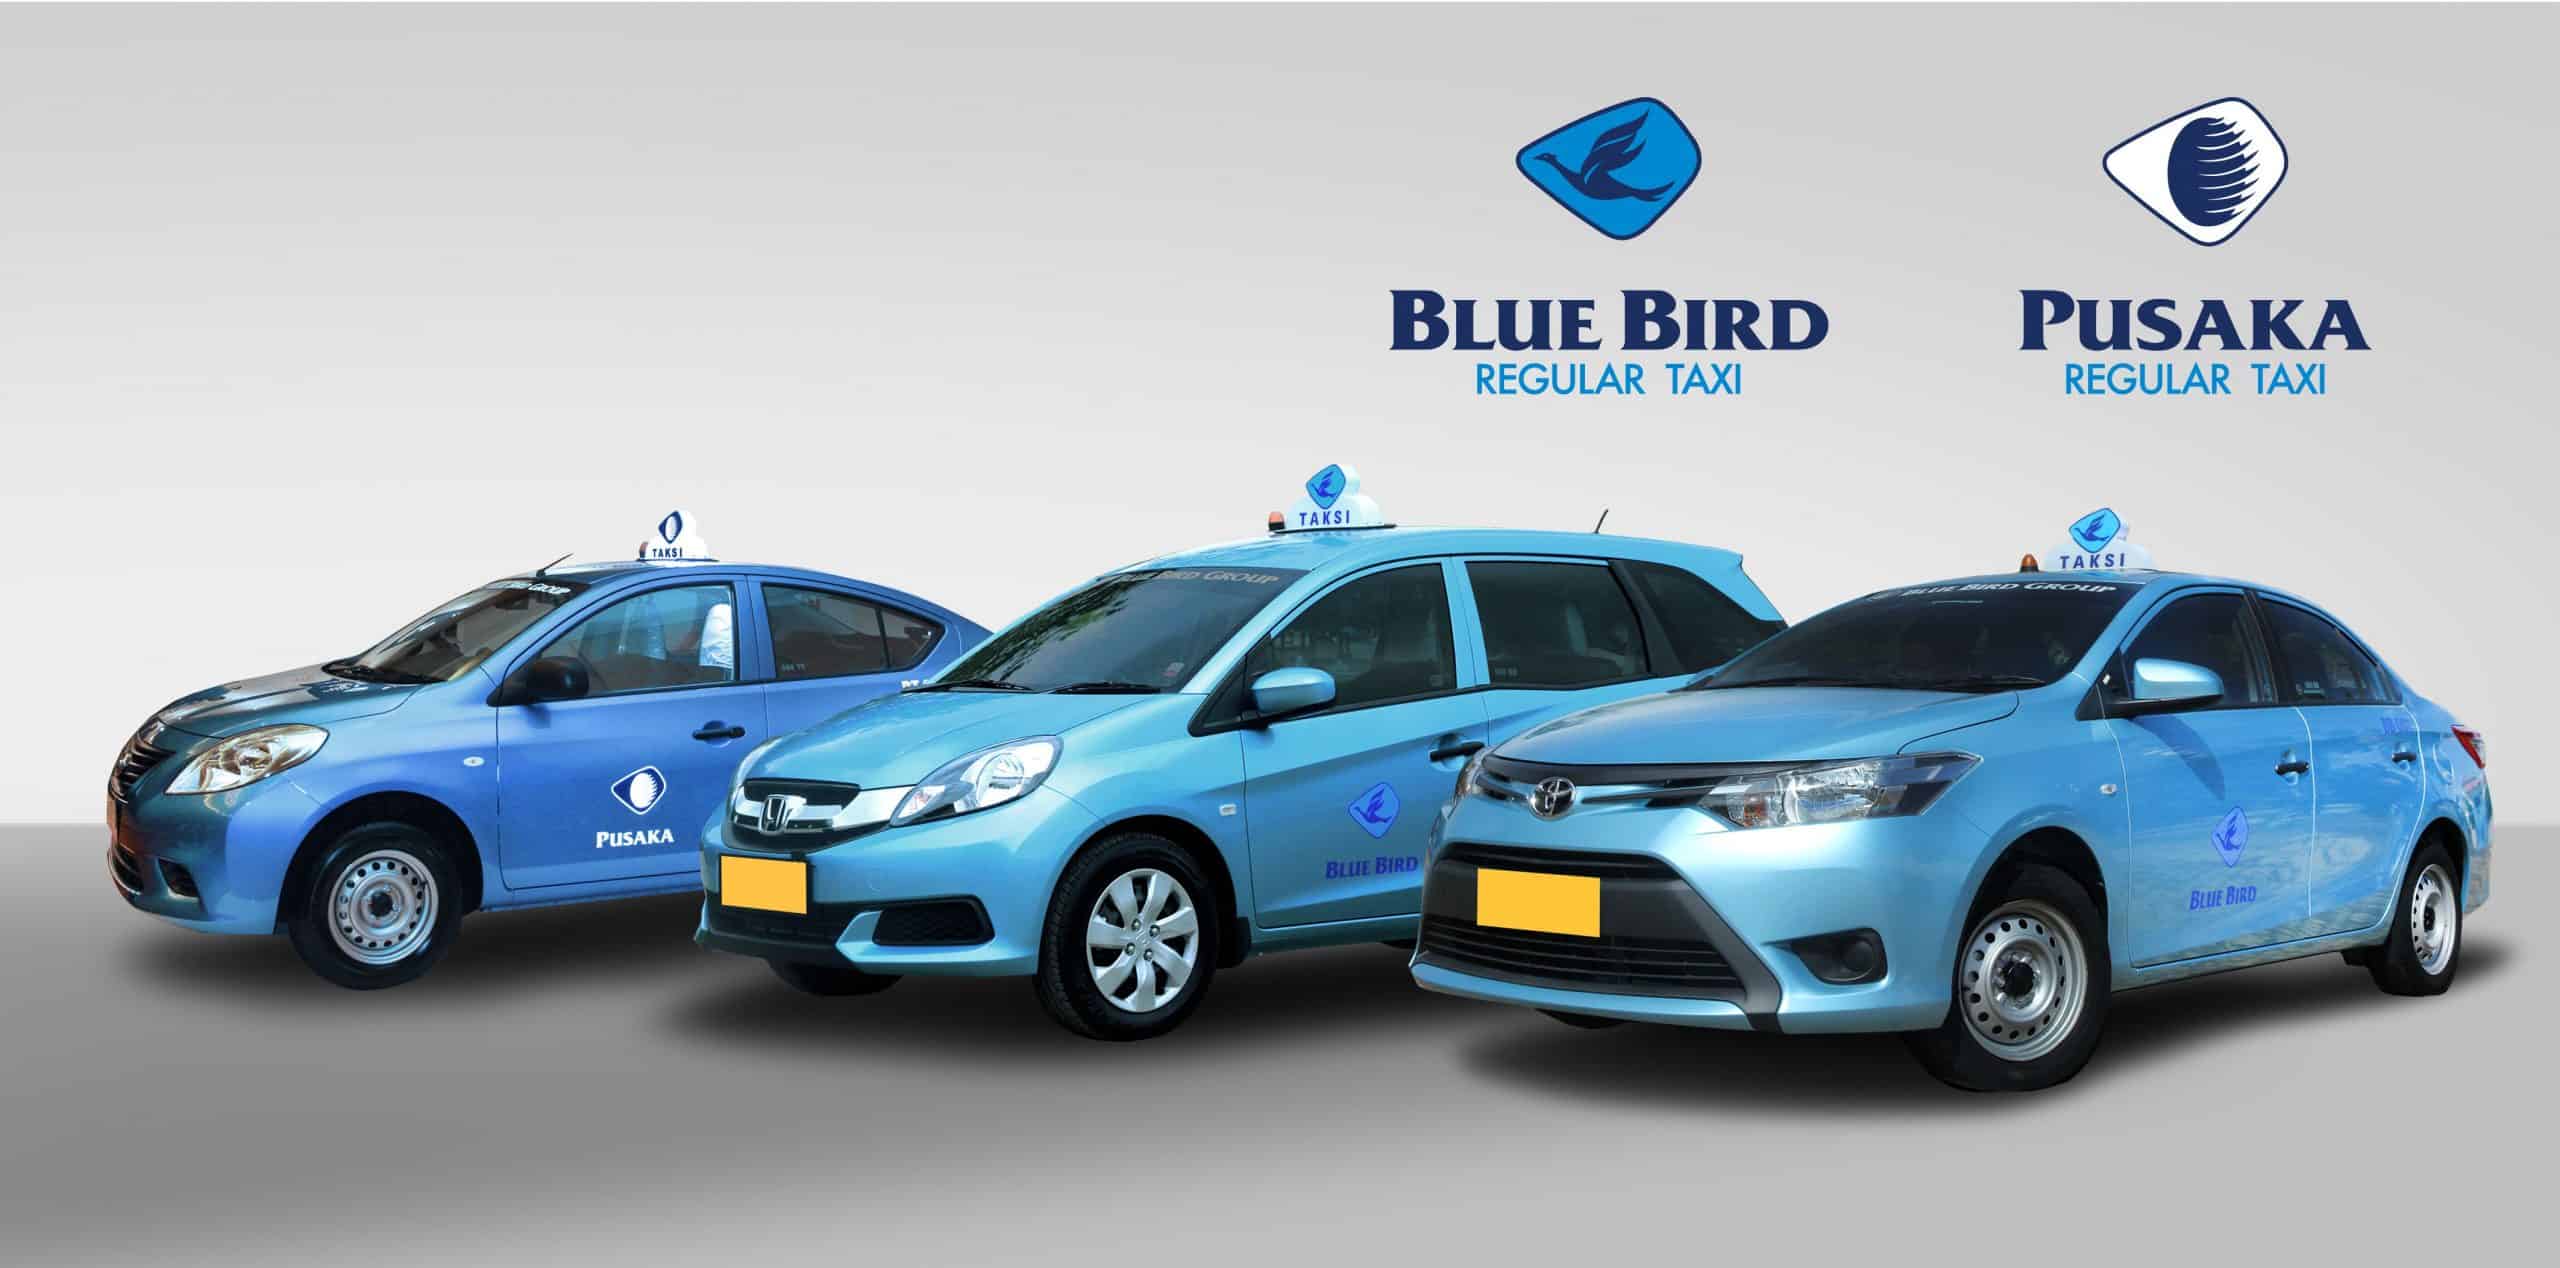 Eksistensi-Taksi-Blue-Bird-di-Jogja